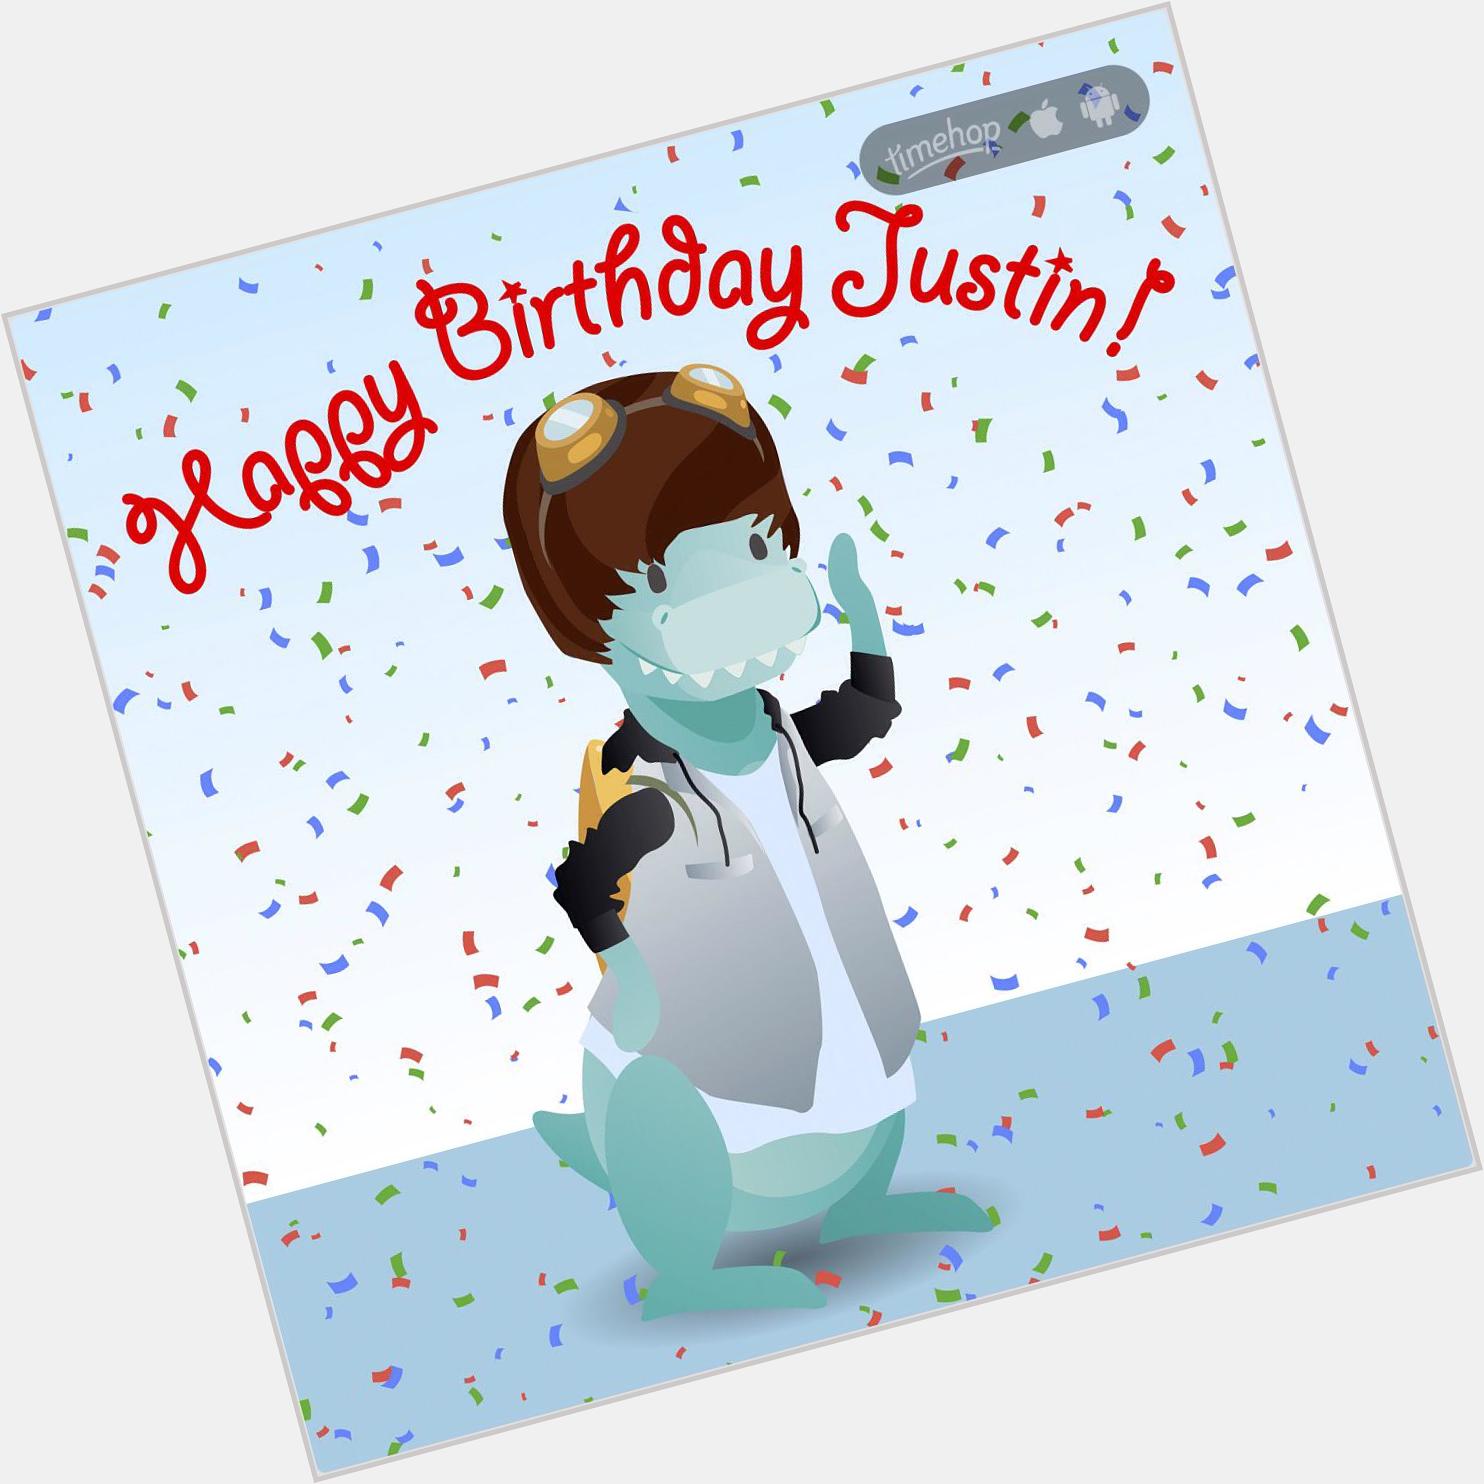 Happy Birthday Justin Bieber! 